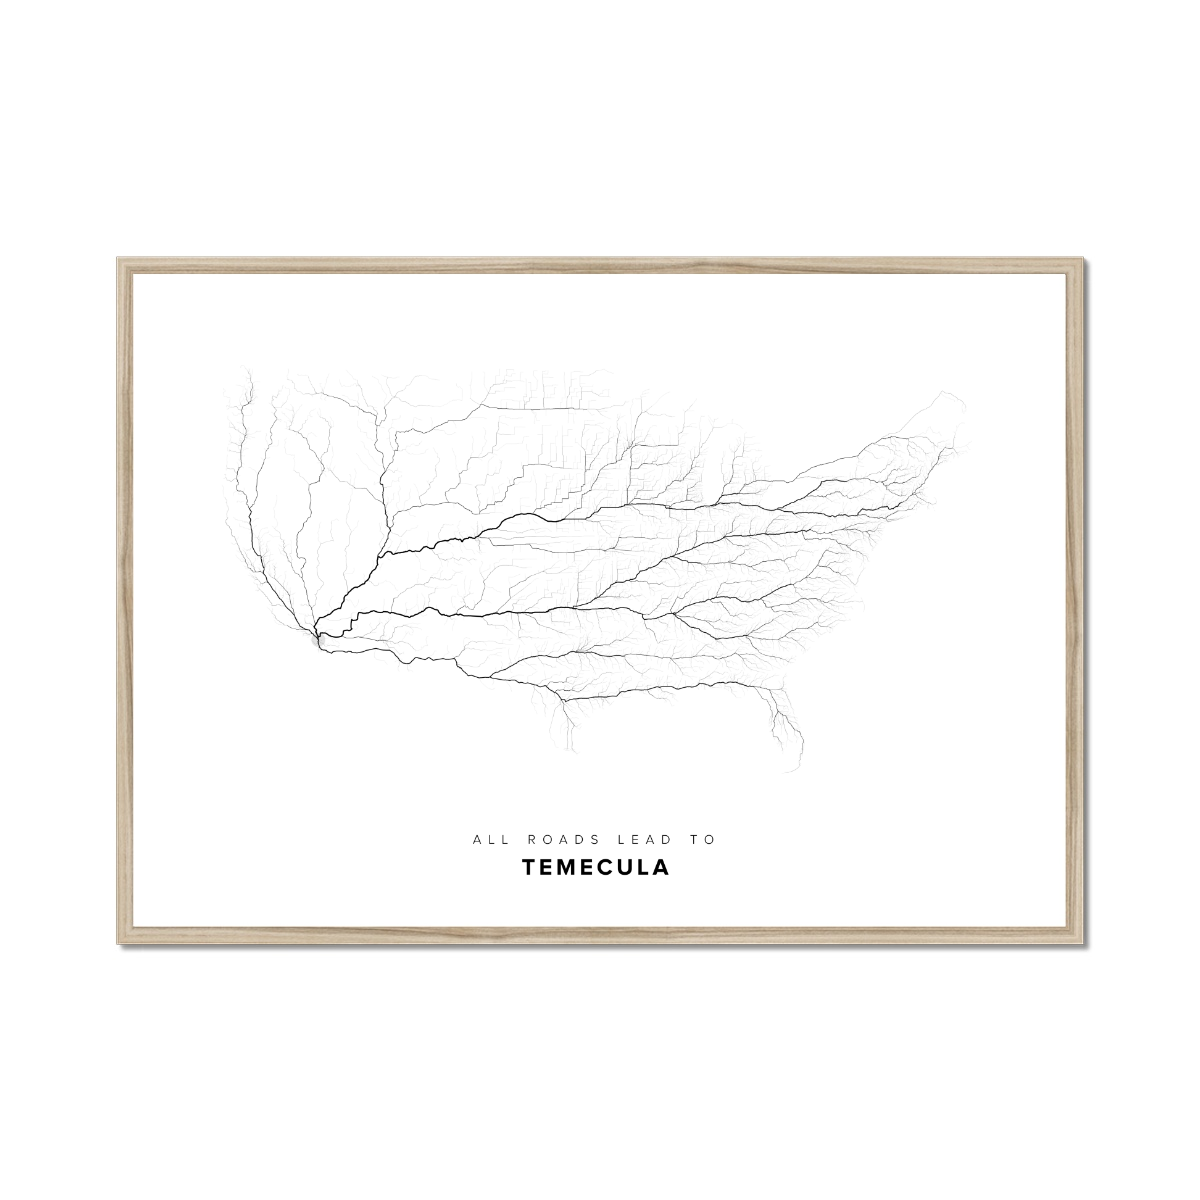 All roads lead to Temecula (United States of America) Fine Art Map Print